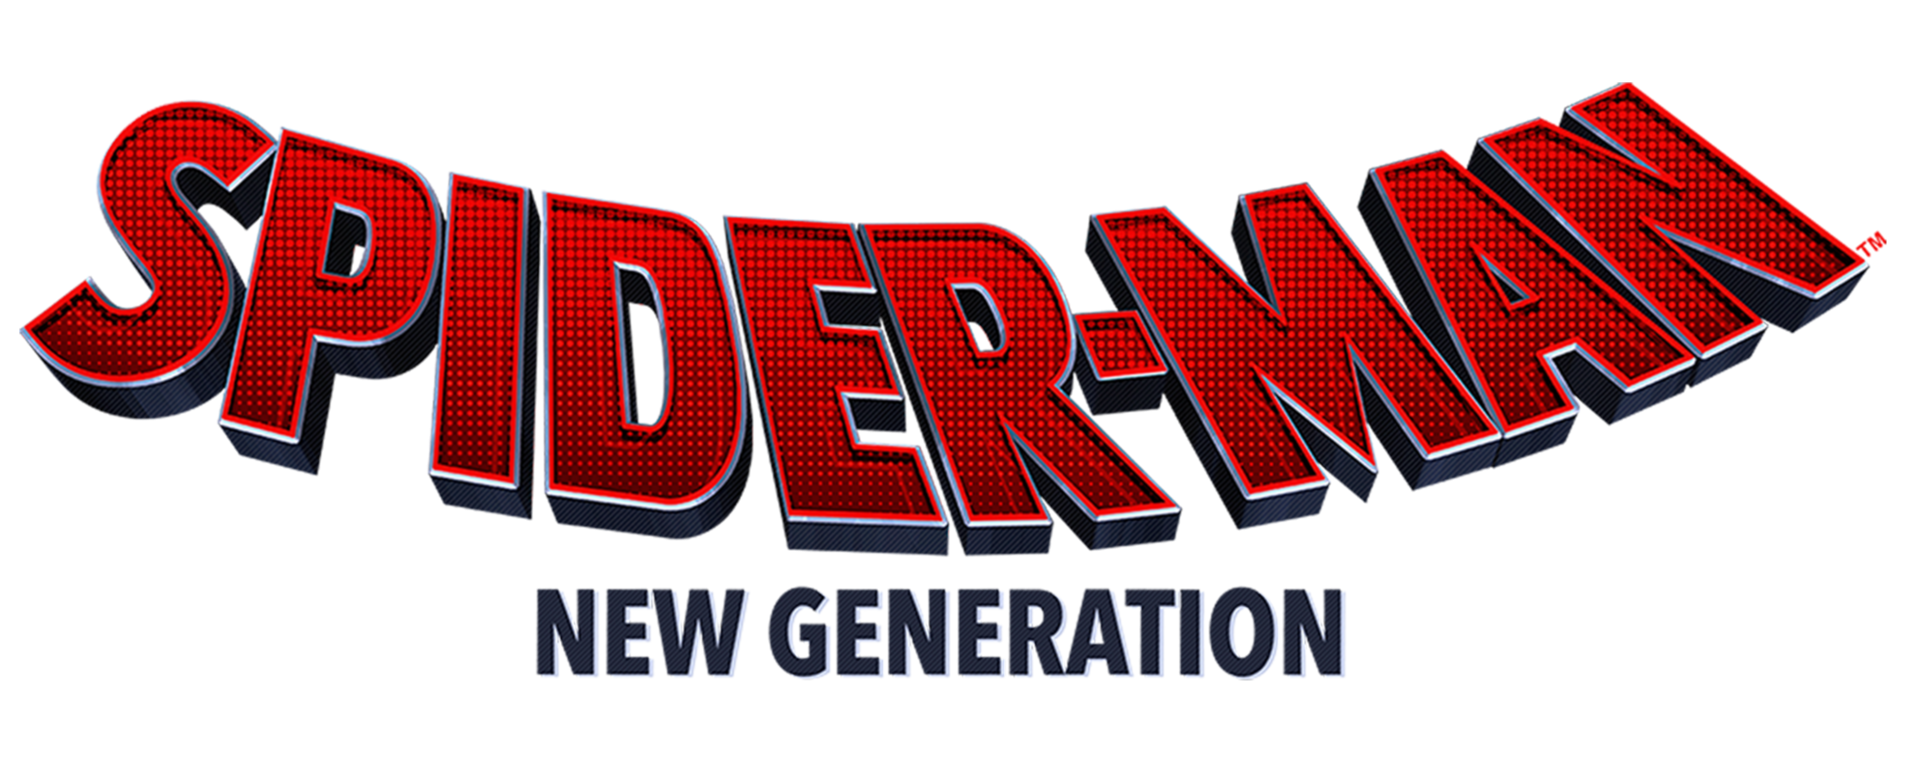 Spidermannewgeneration logo